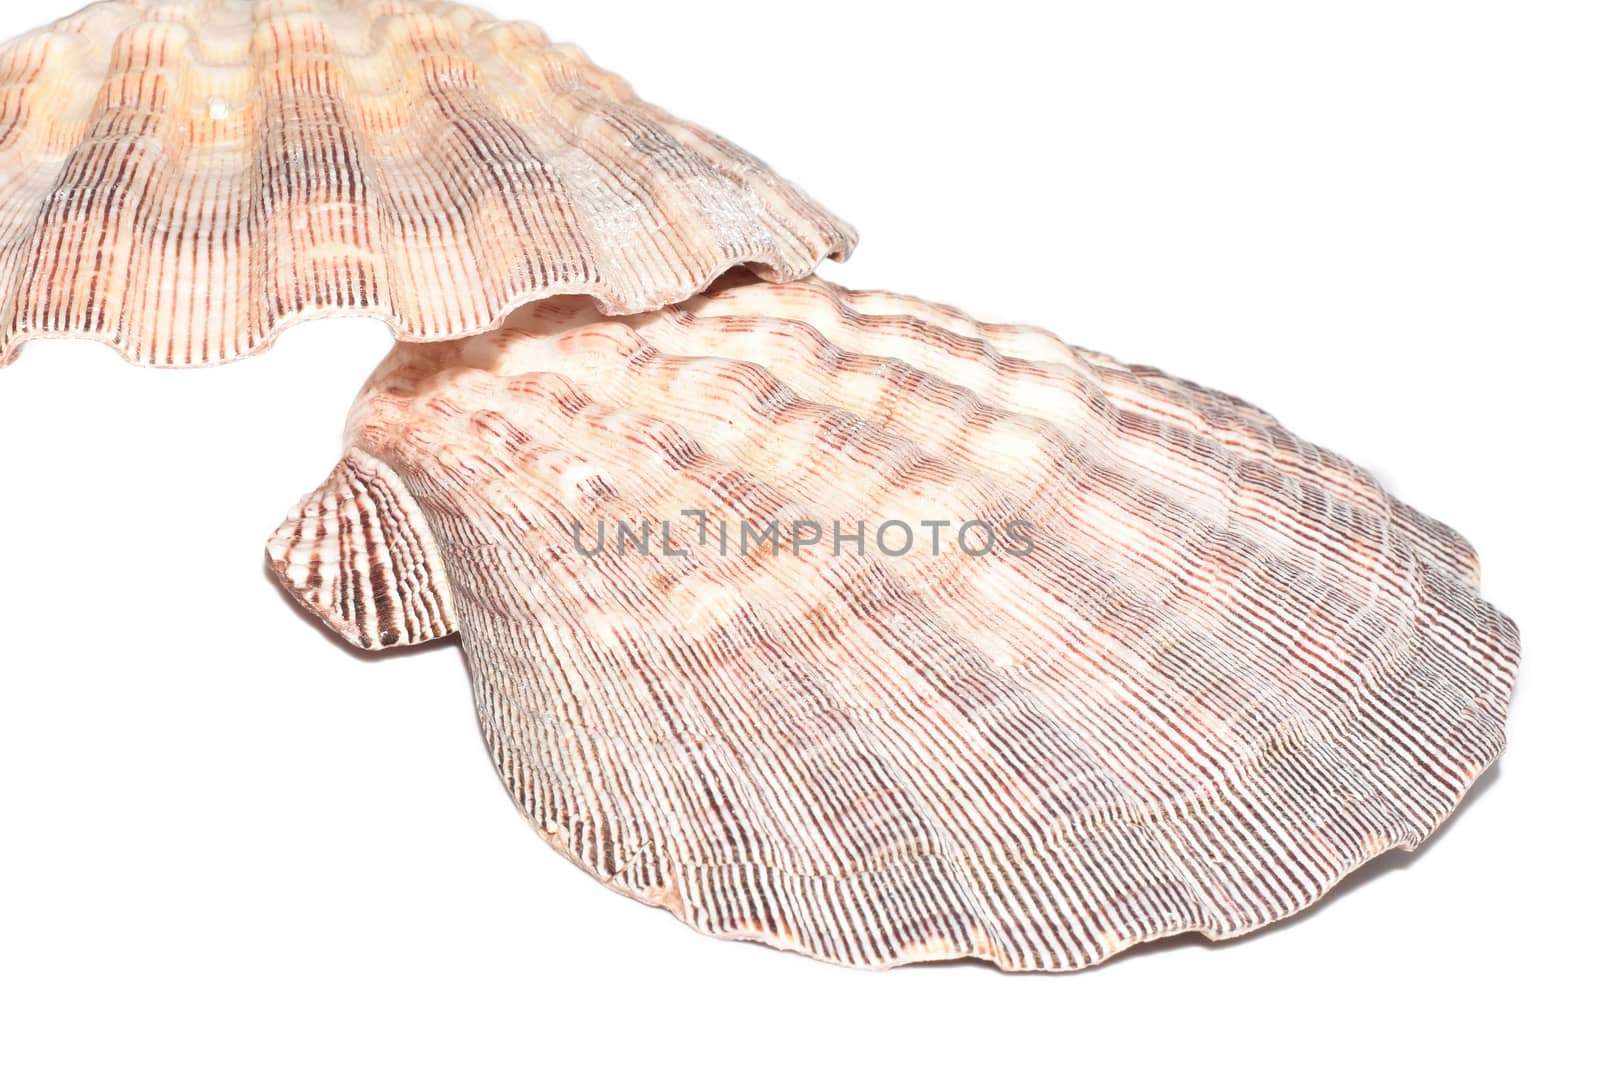 Seashell Lyropecten nodosus by stellar